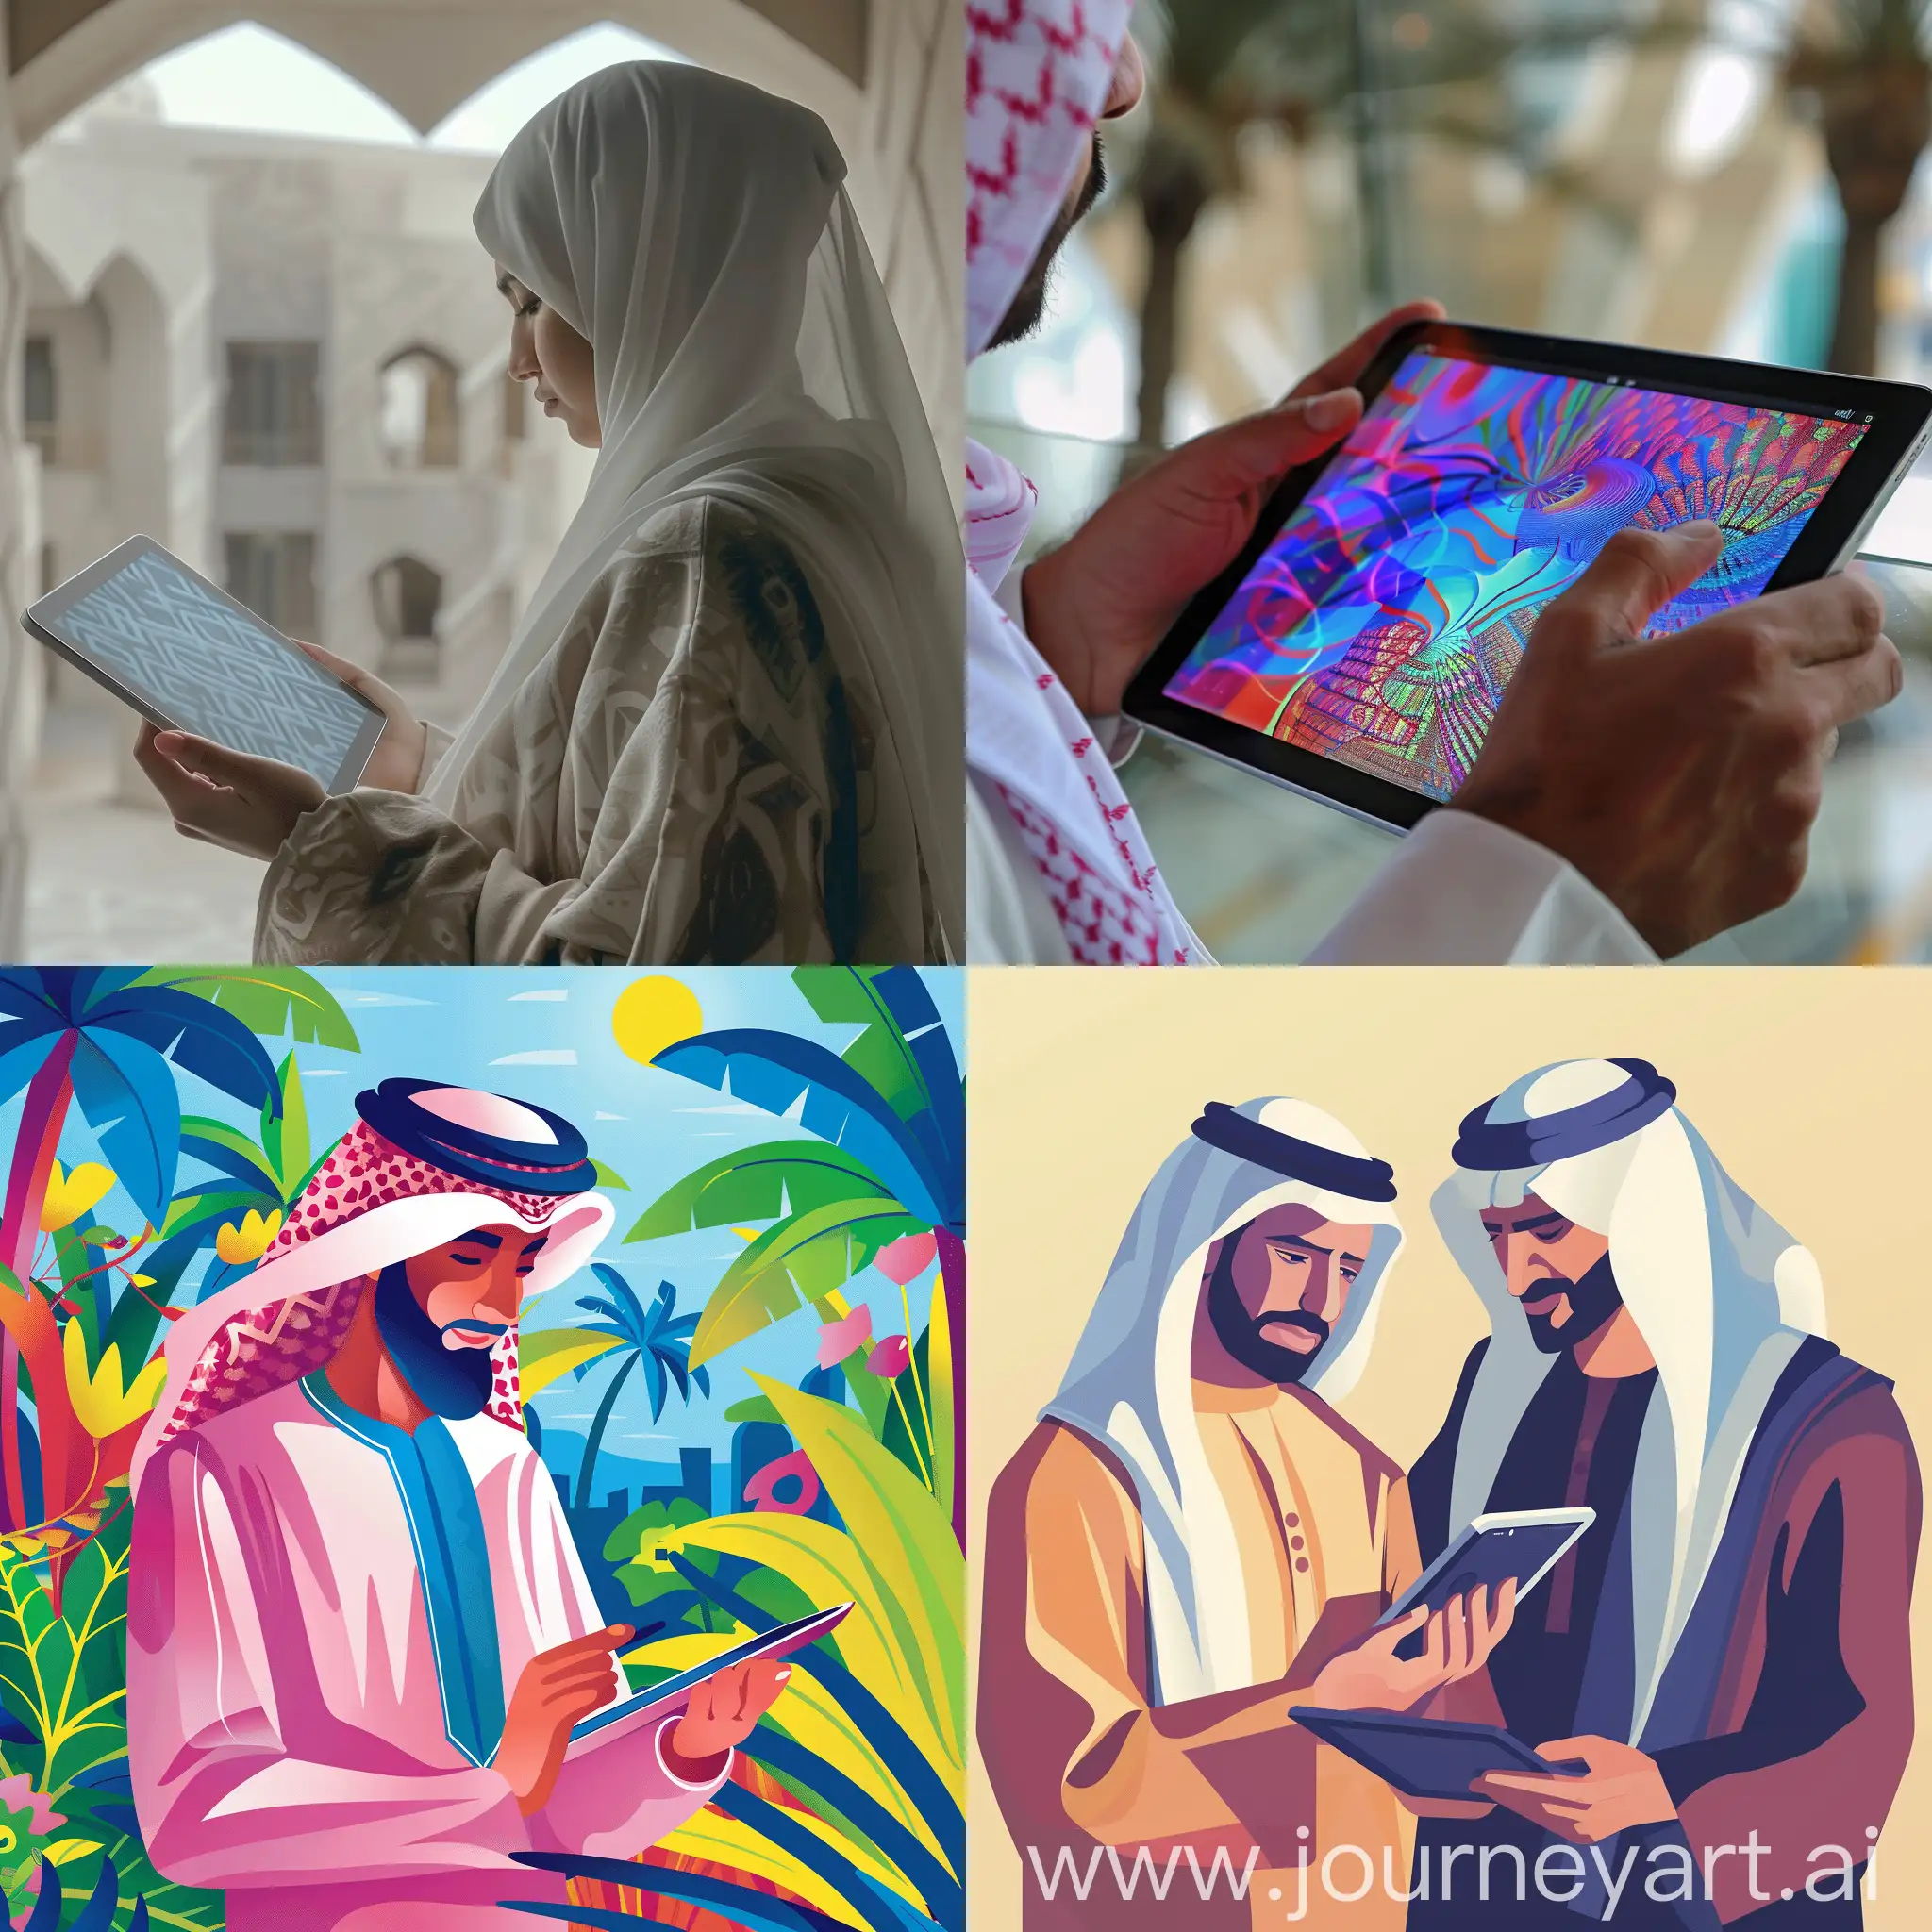 Digital creativity,tablet,Qatari society